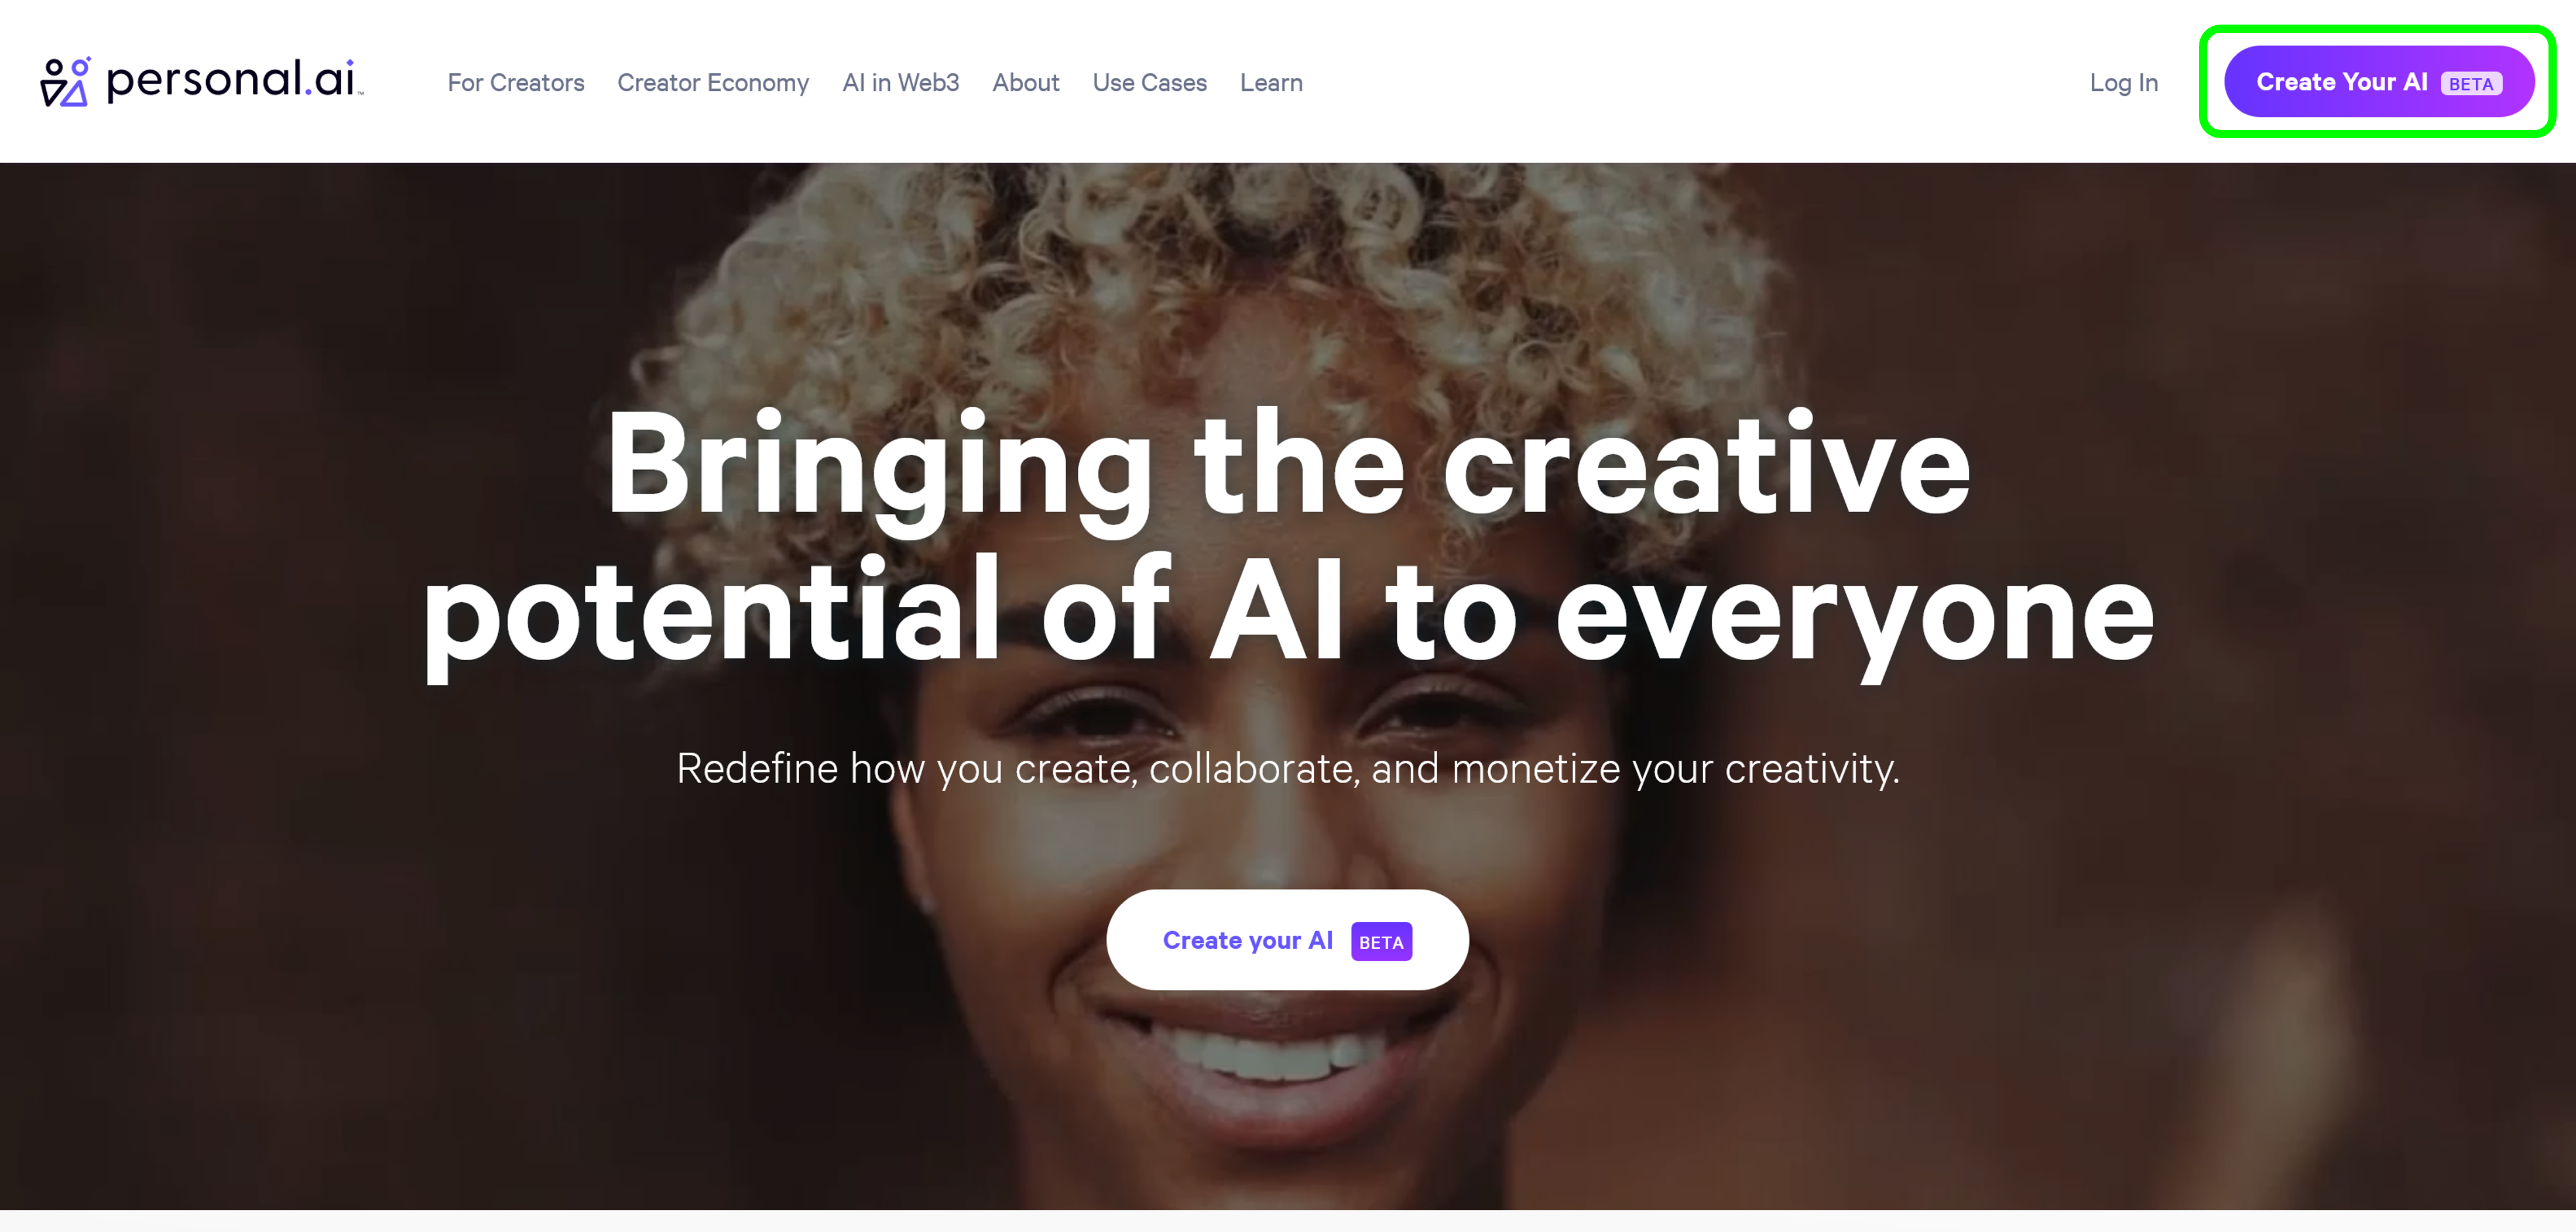 Screenshot of "Create Your AI" on main website